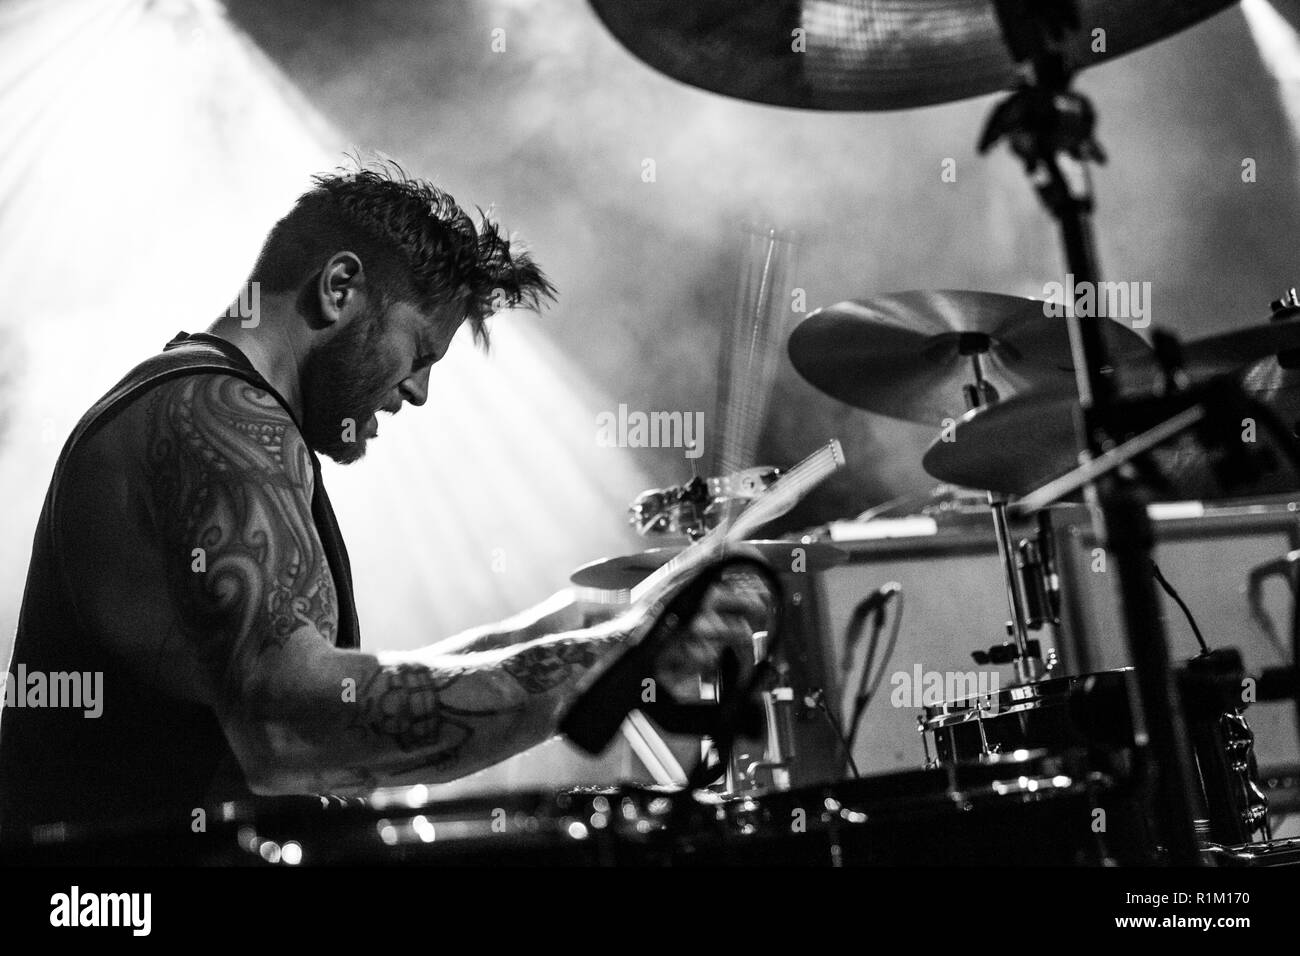 Turbowolf (Blake Davies drummer) - 4th Nov 2018 - Newcastle Northumbria Institute - Live concert photography Stock Photo